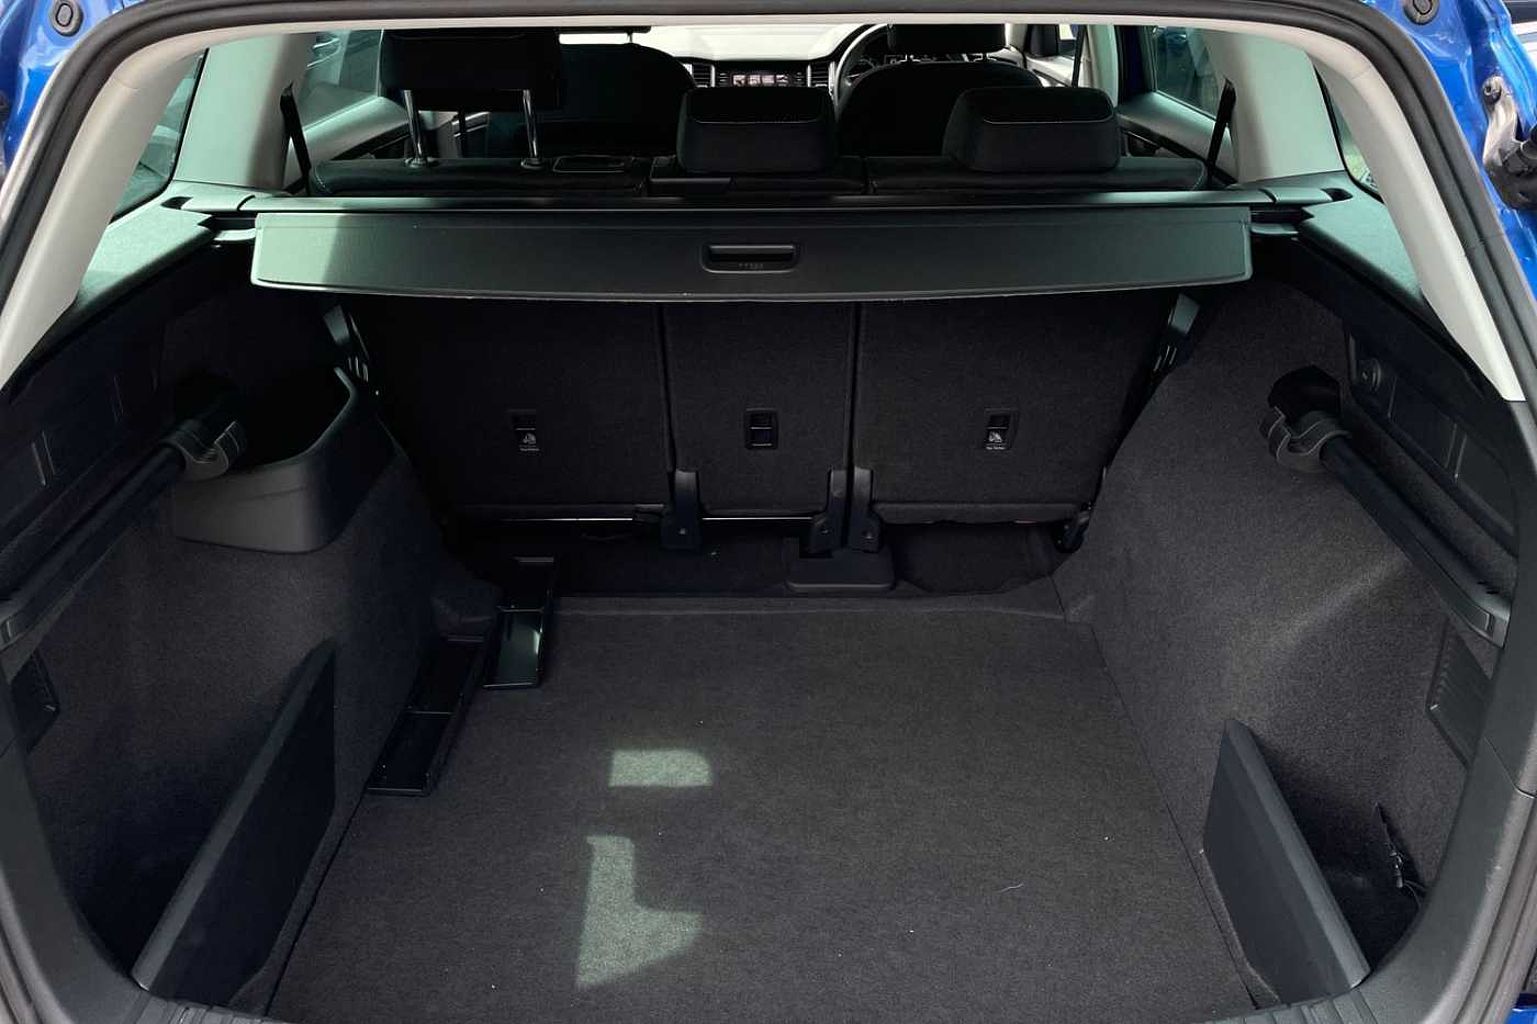 SKODA Kodiaq 1.5 TSI (150ps) SE (5 seats) ACT SUV